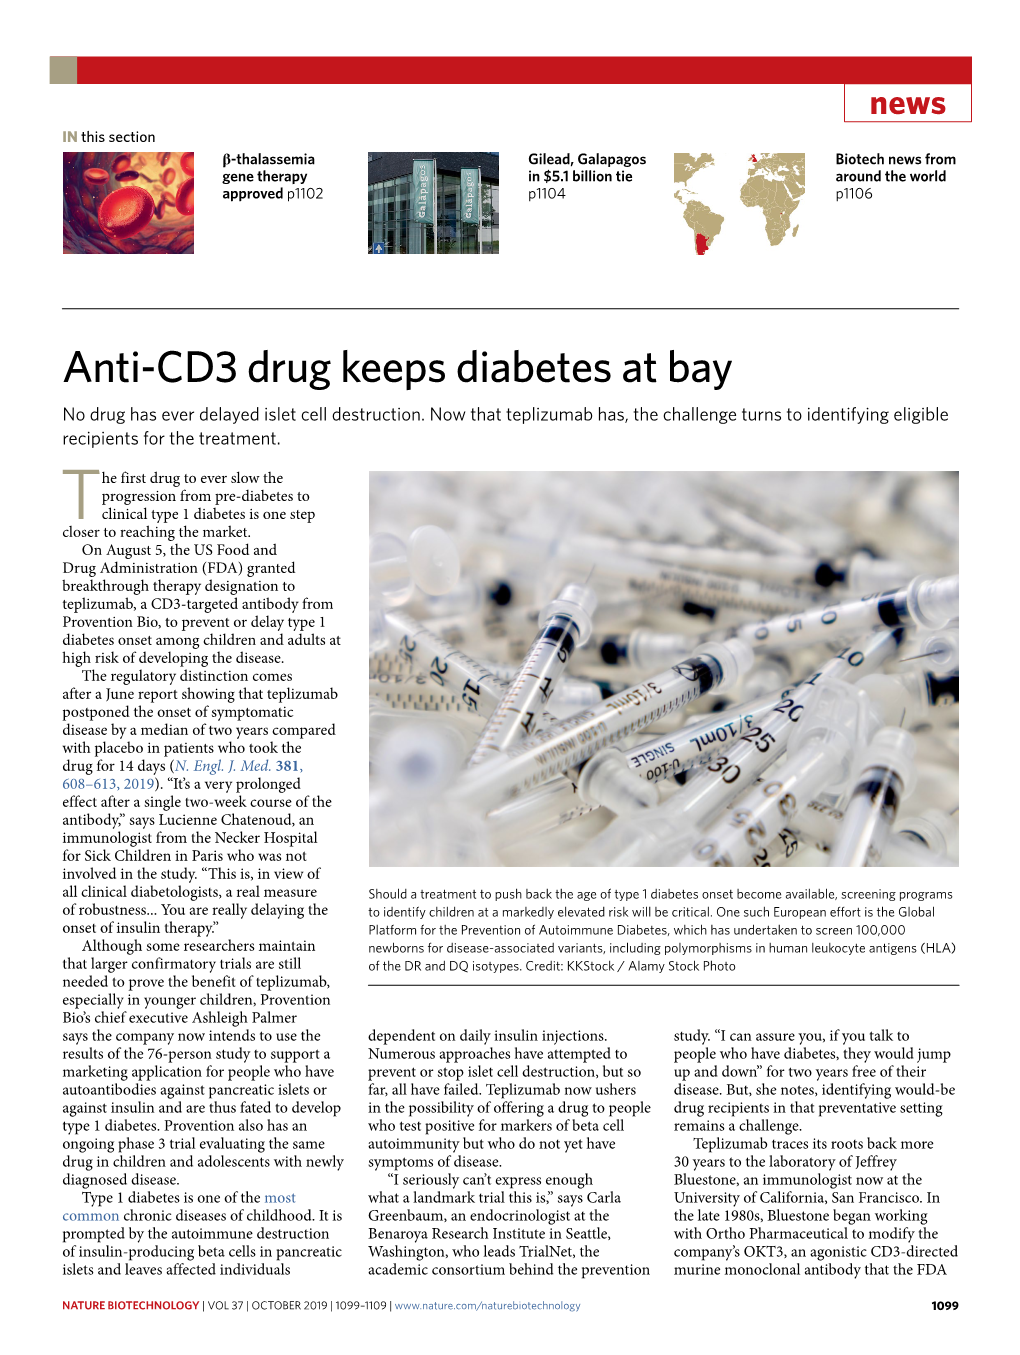 Anti-CD3 Drug Keeps Diabetes at Bay No Drug Has Ever Delayed Islet Cell Destruction